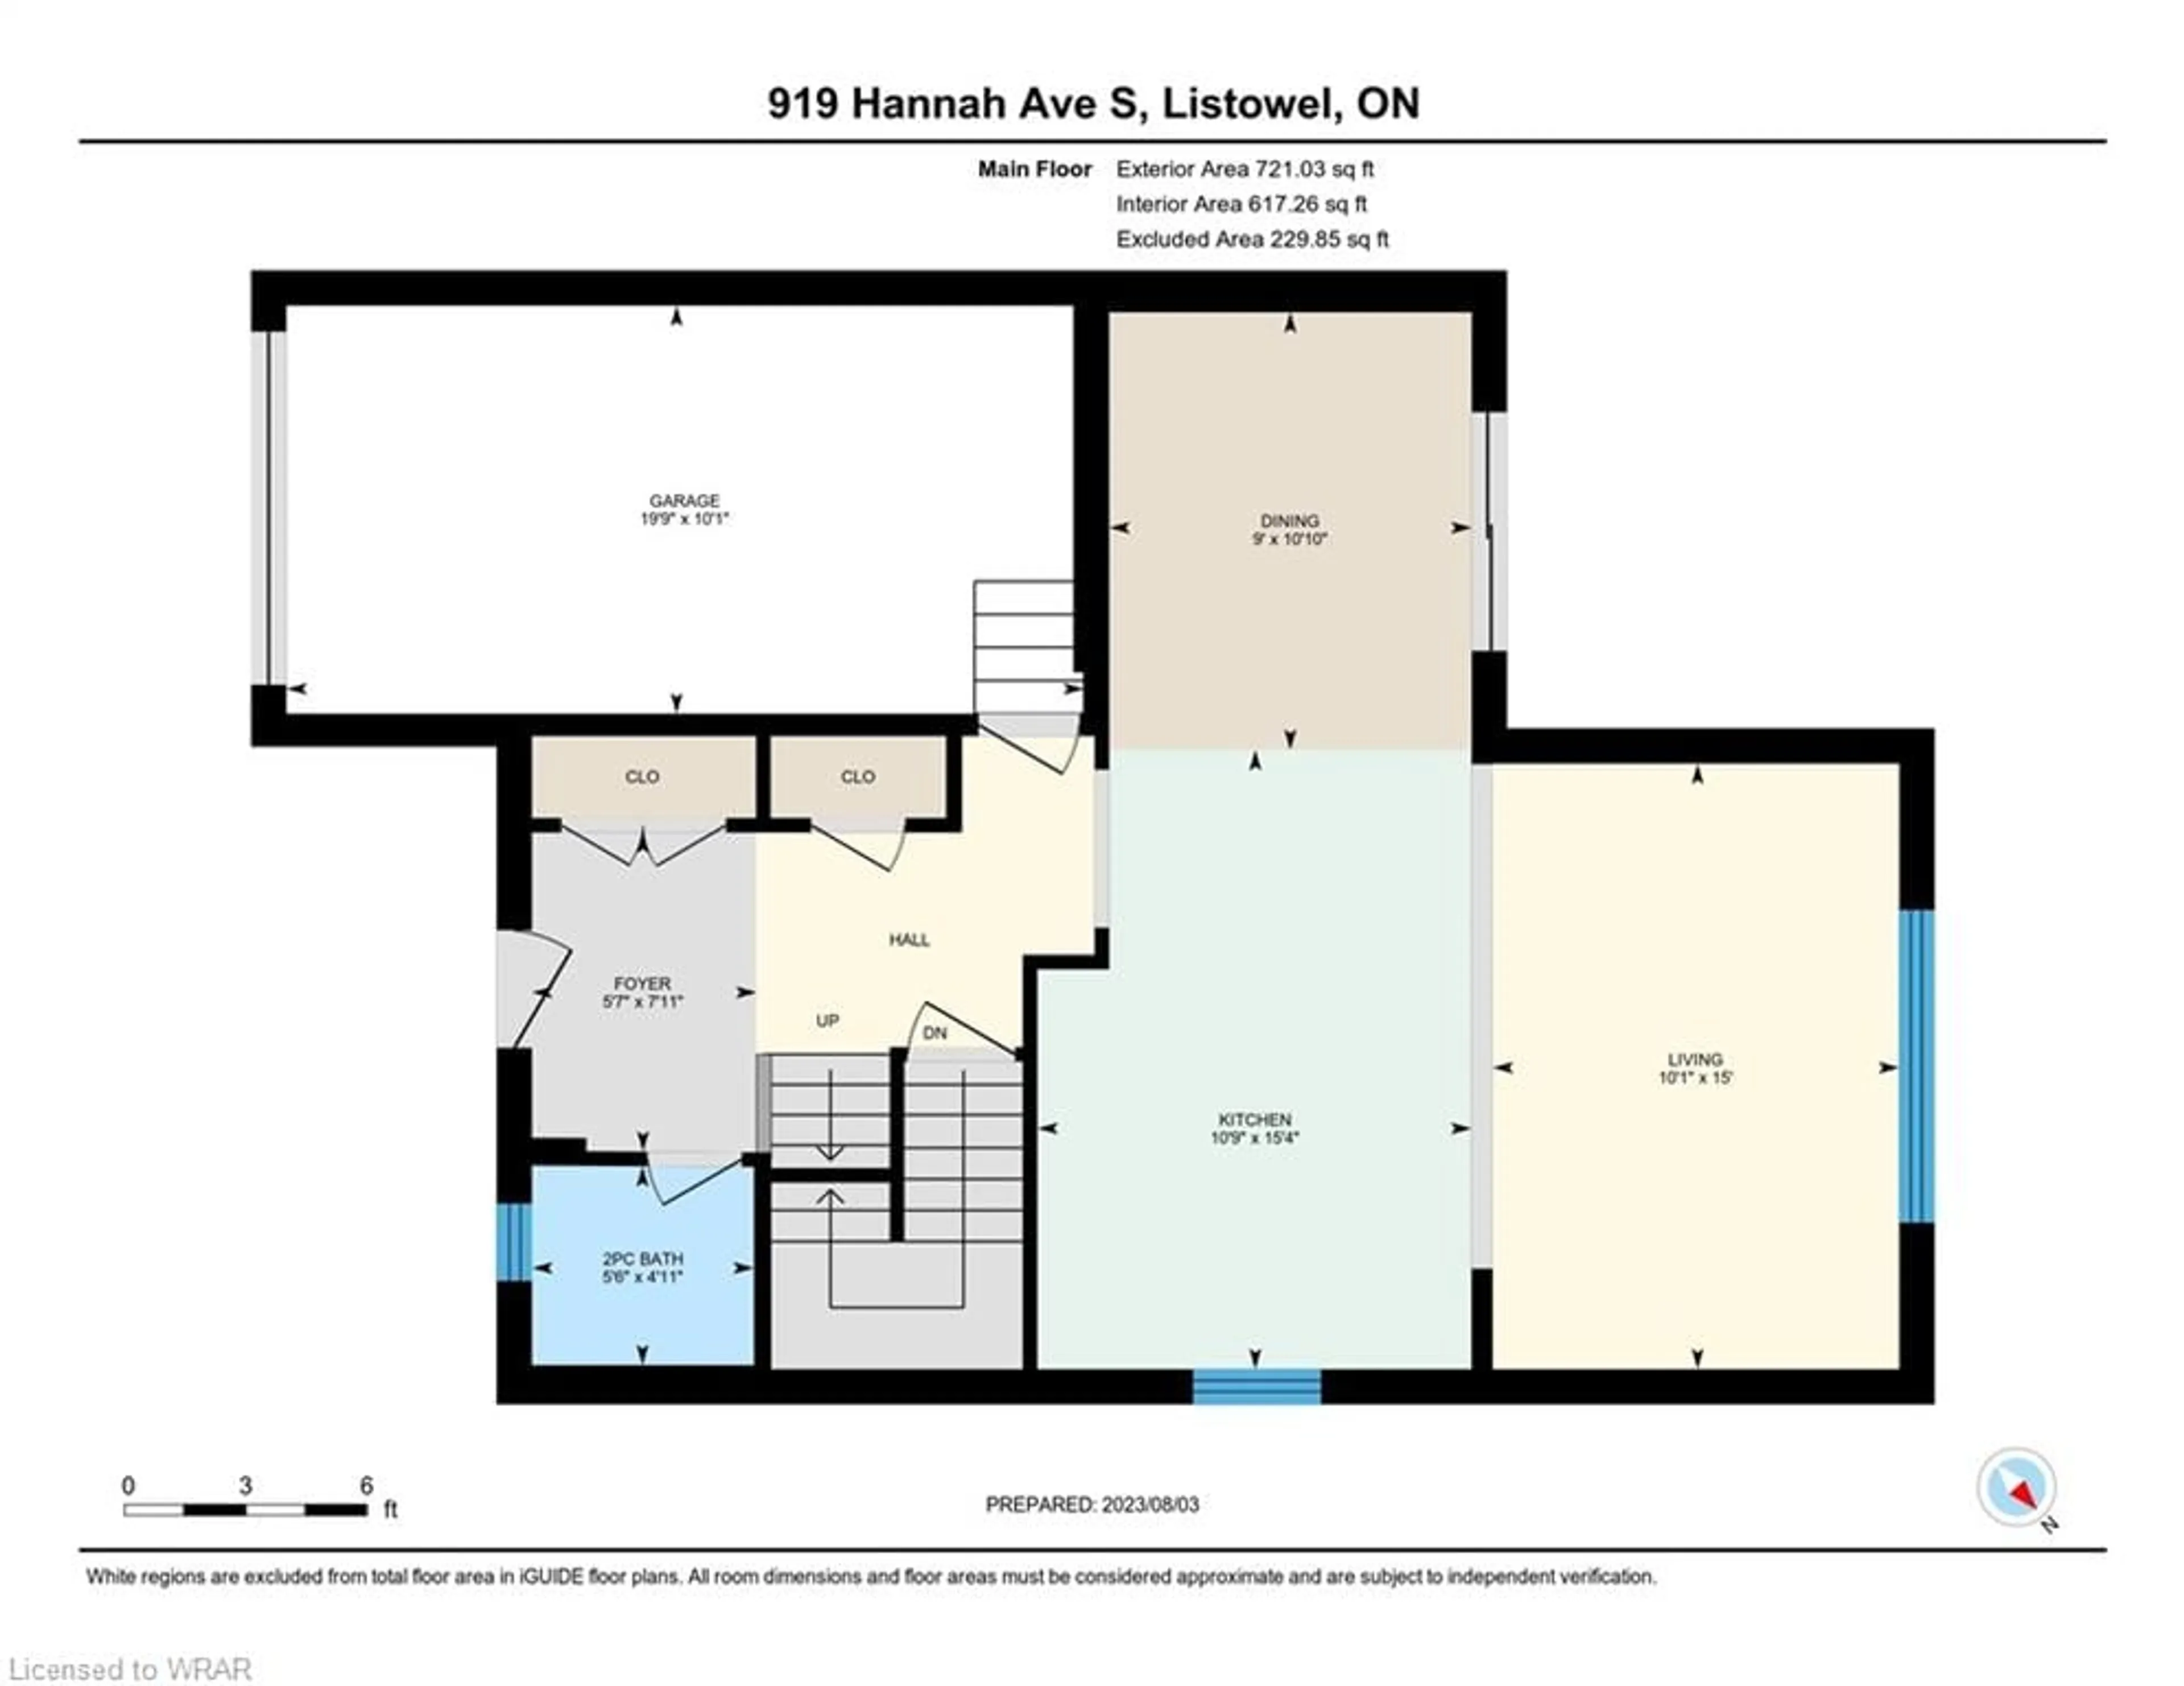 Floor plan for 919 Hannah Ave, Listowel Ontario N4W 0H7